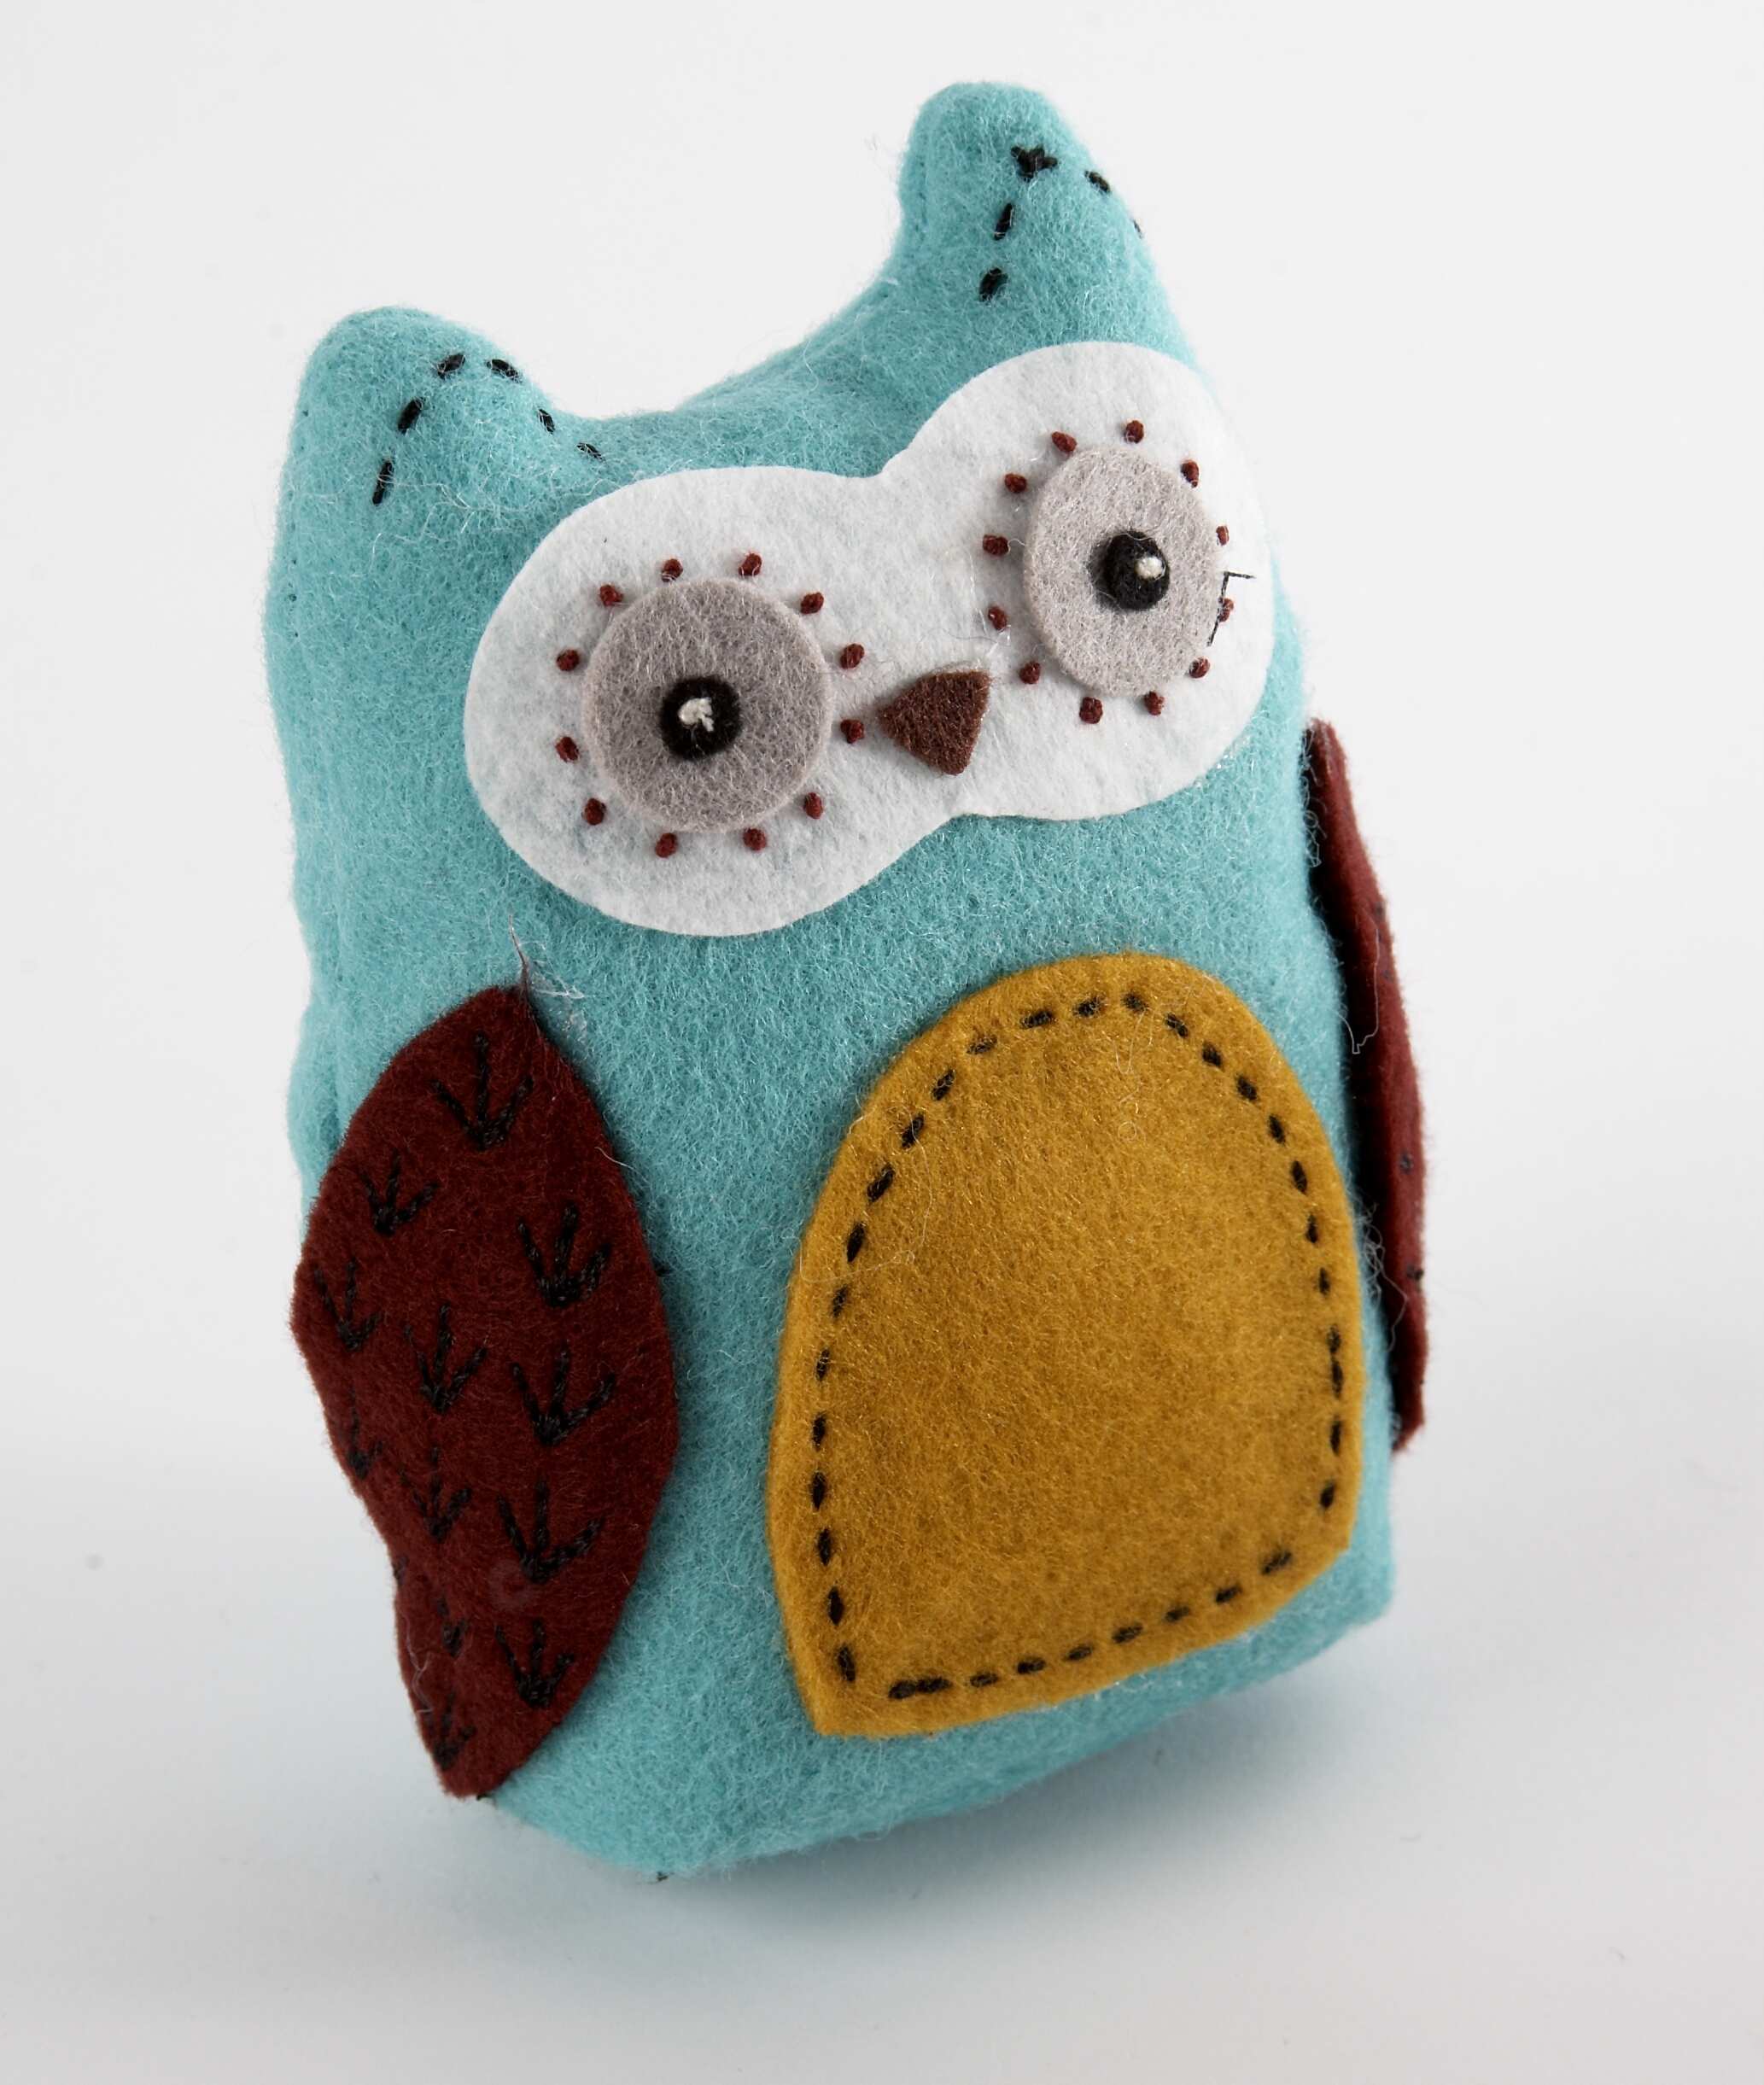 Pincushion: Owl